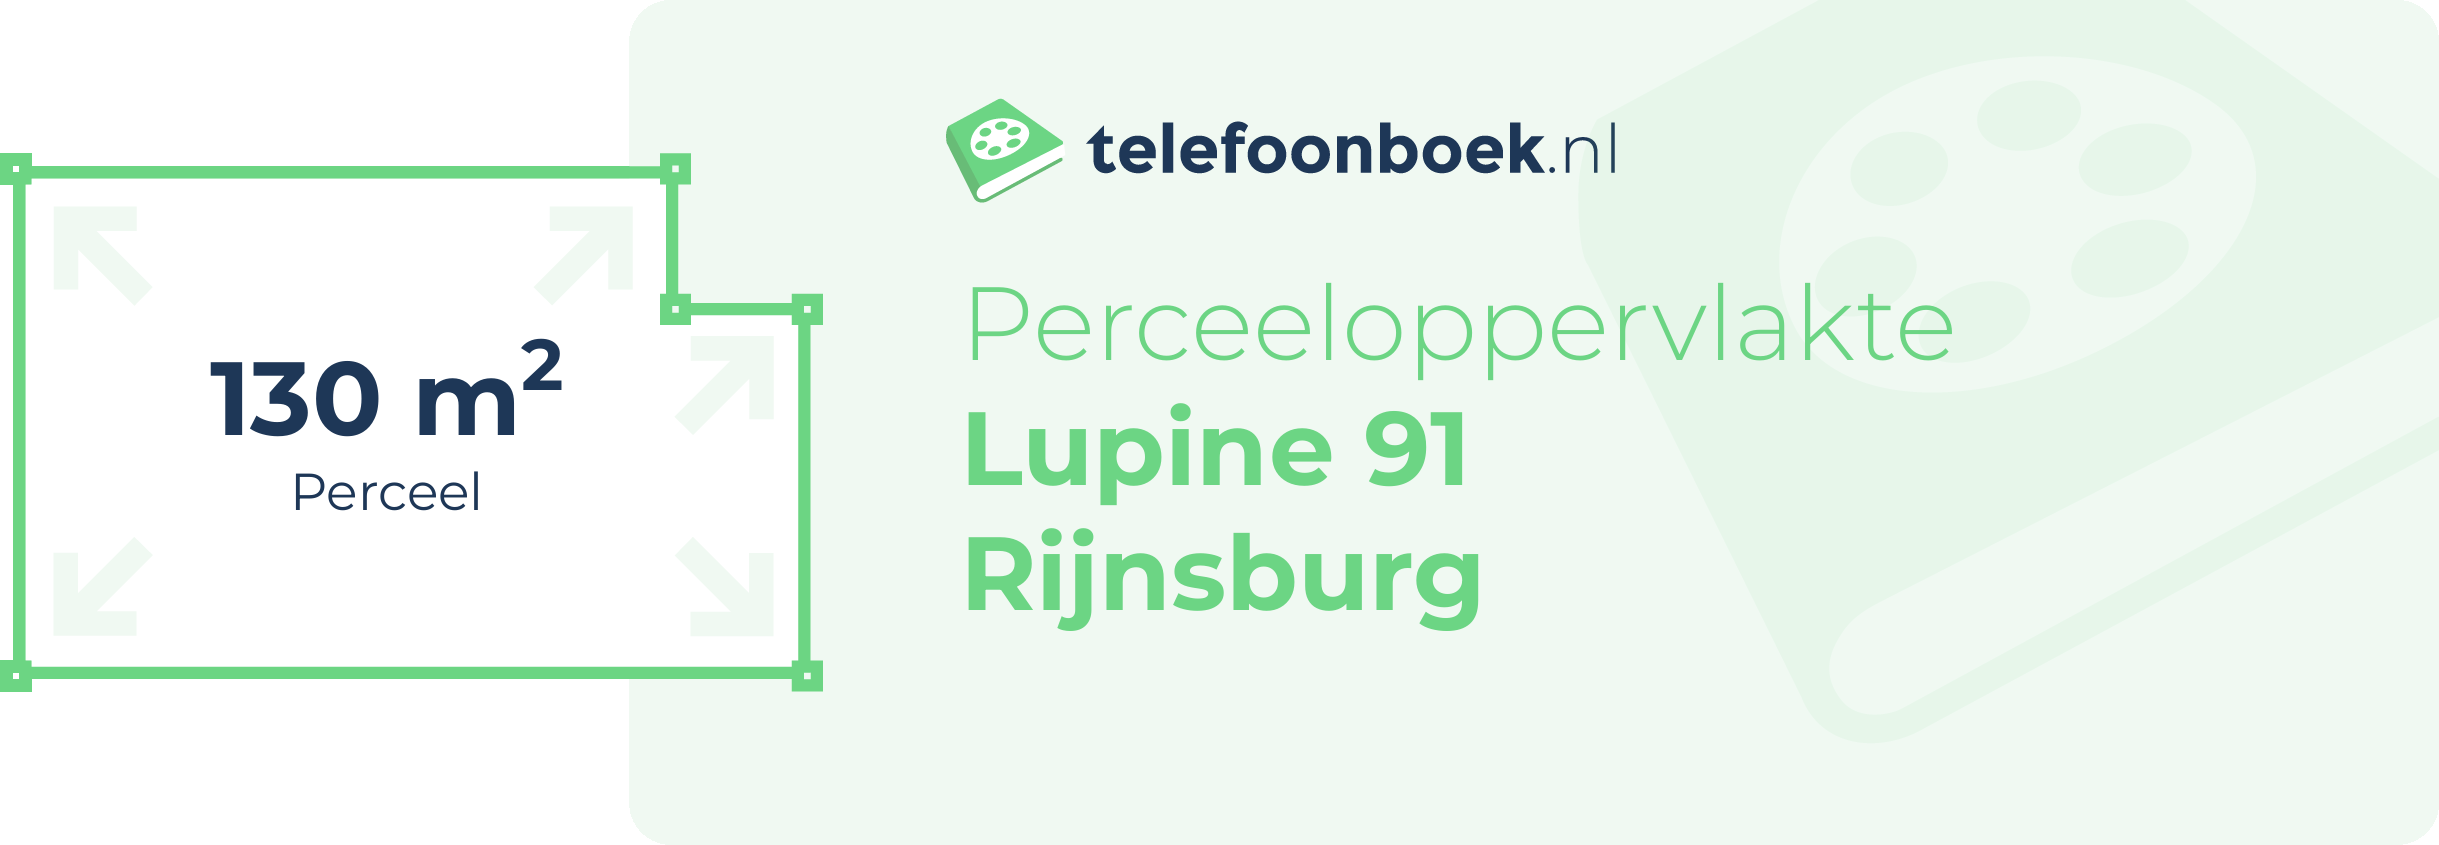 Perceeloppervlakte Lupine 91 Rijnsburg